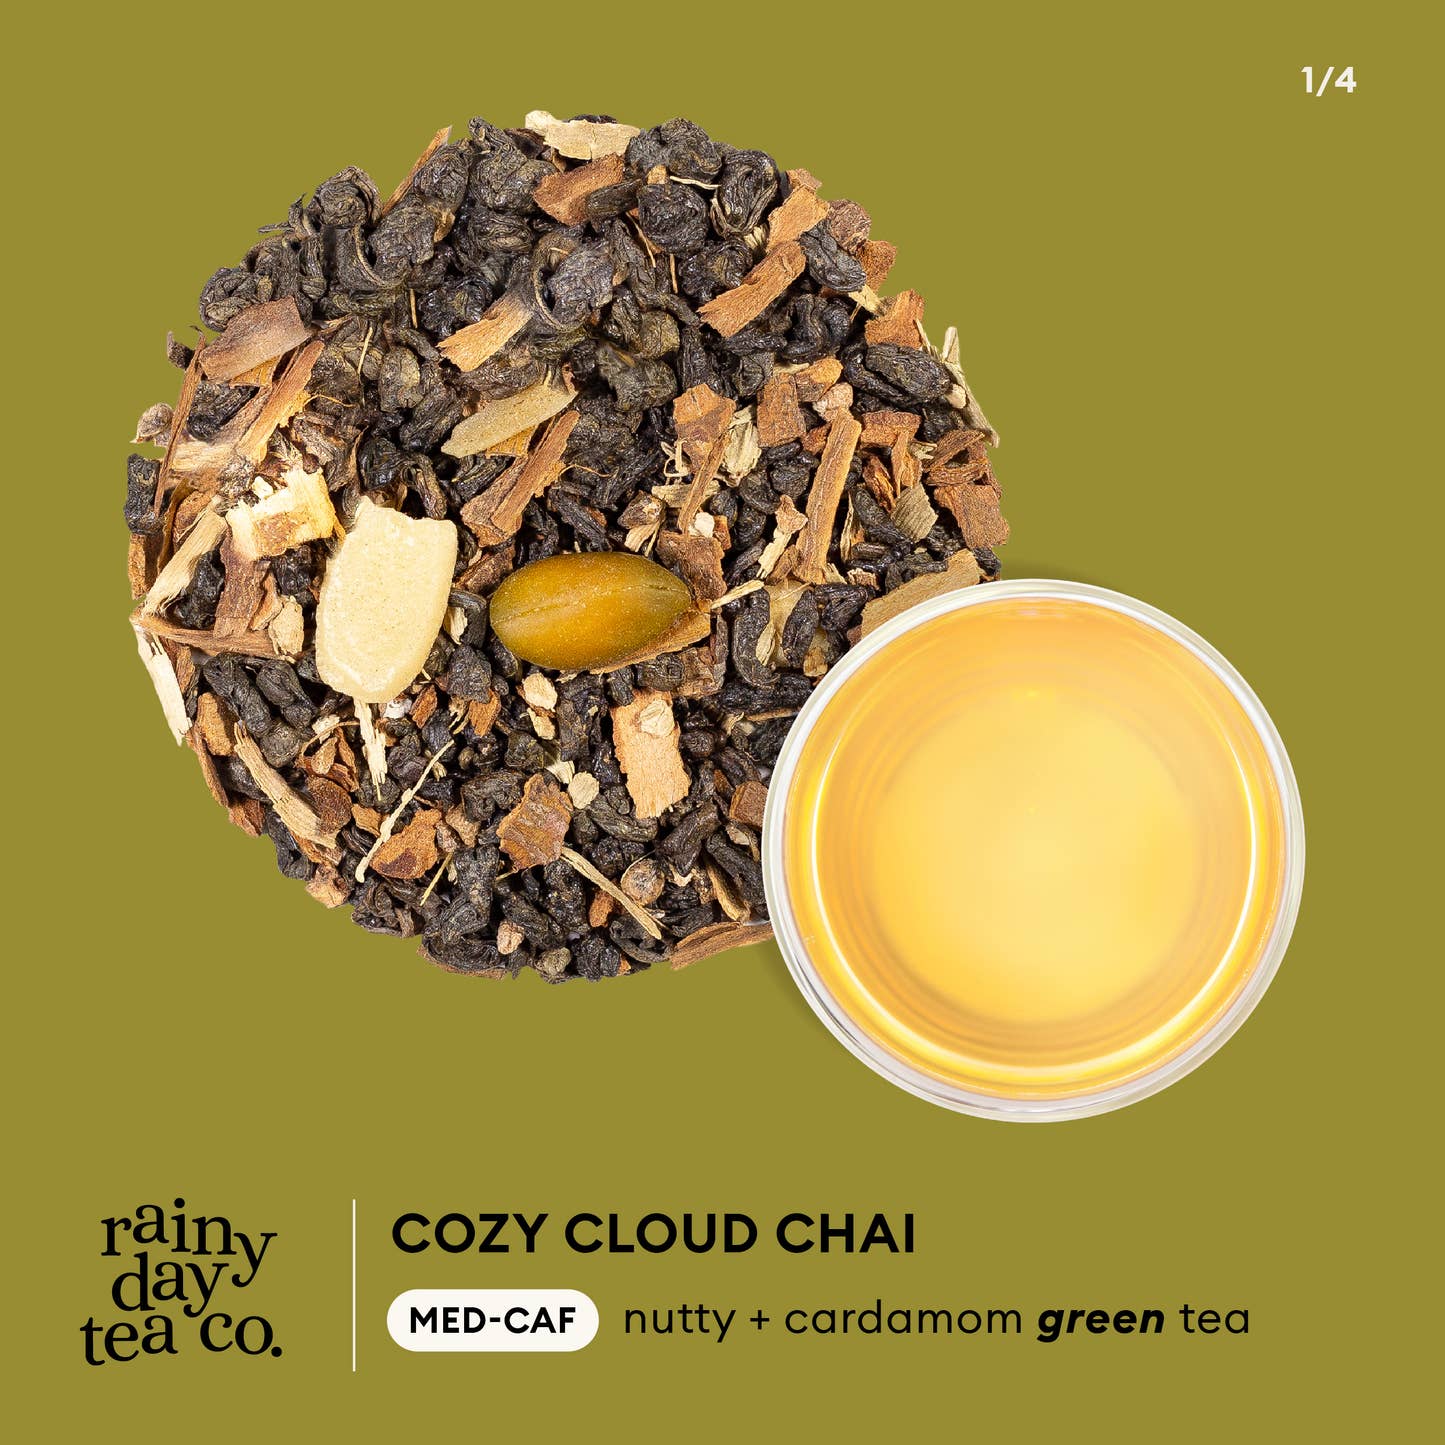 Rainy Day Tea Co - Cozy Cloud Chai med-caf, nutty + cardamom infographic